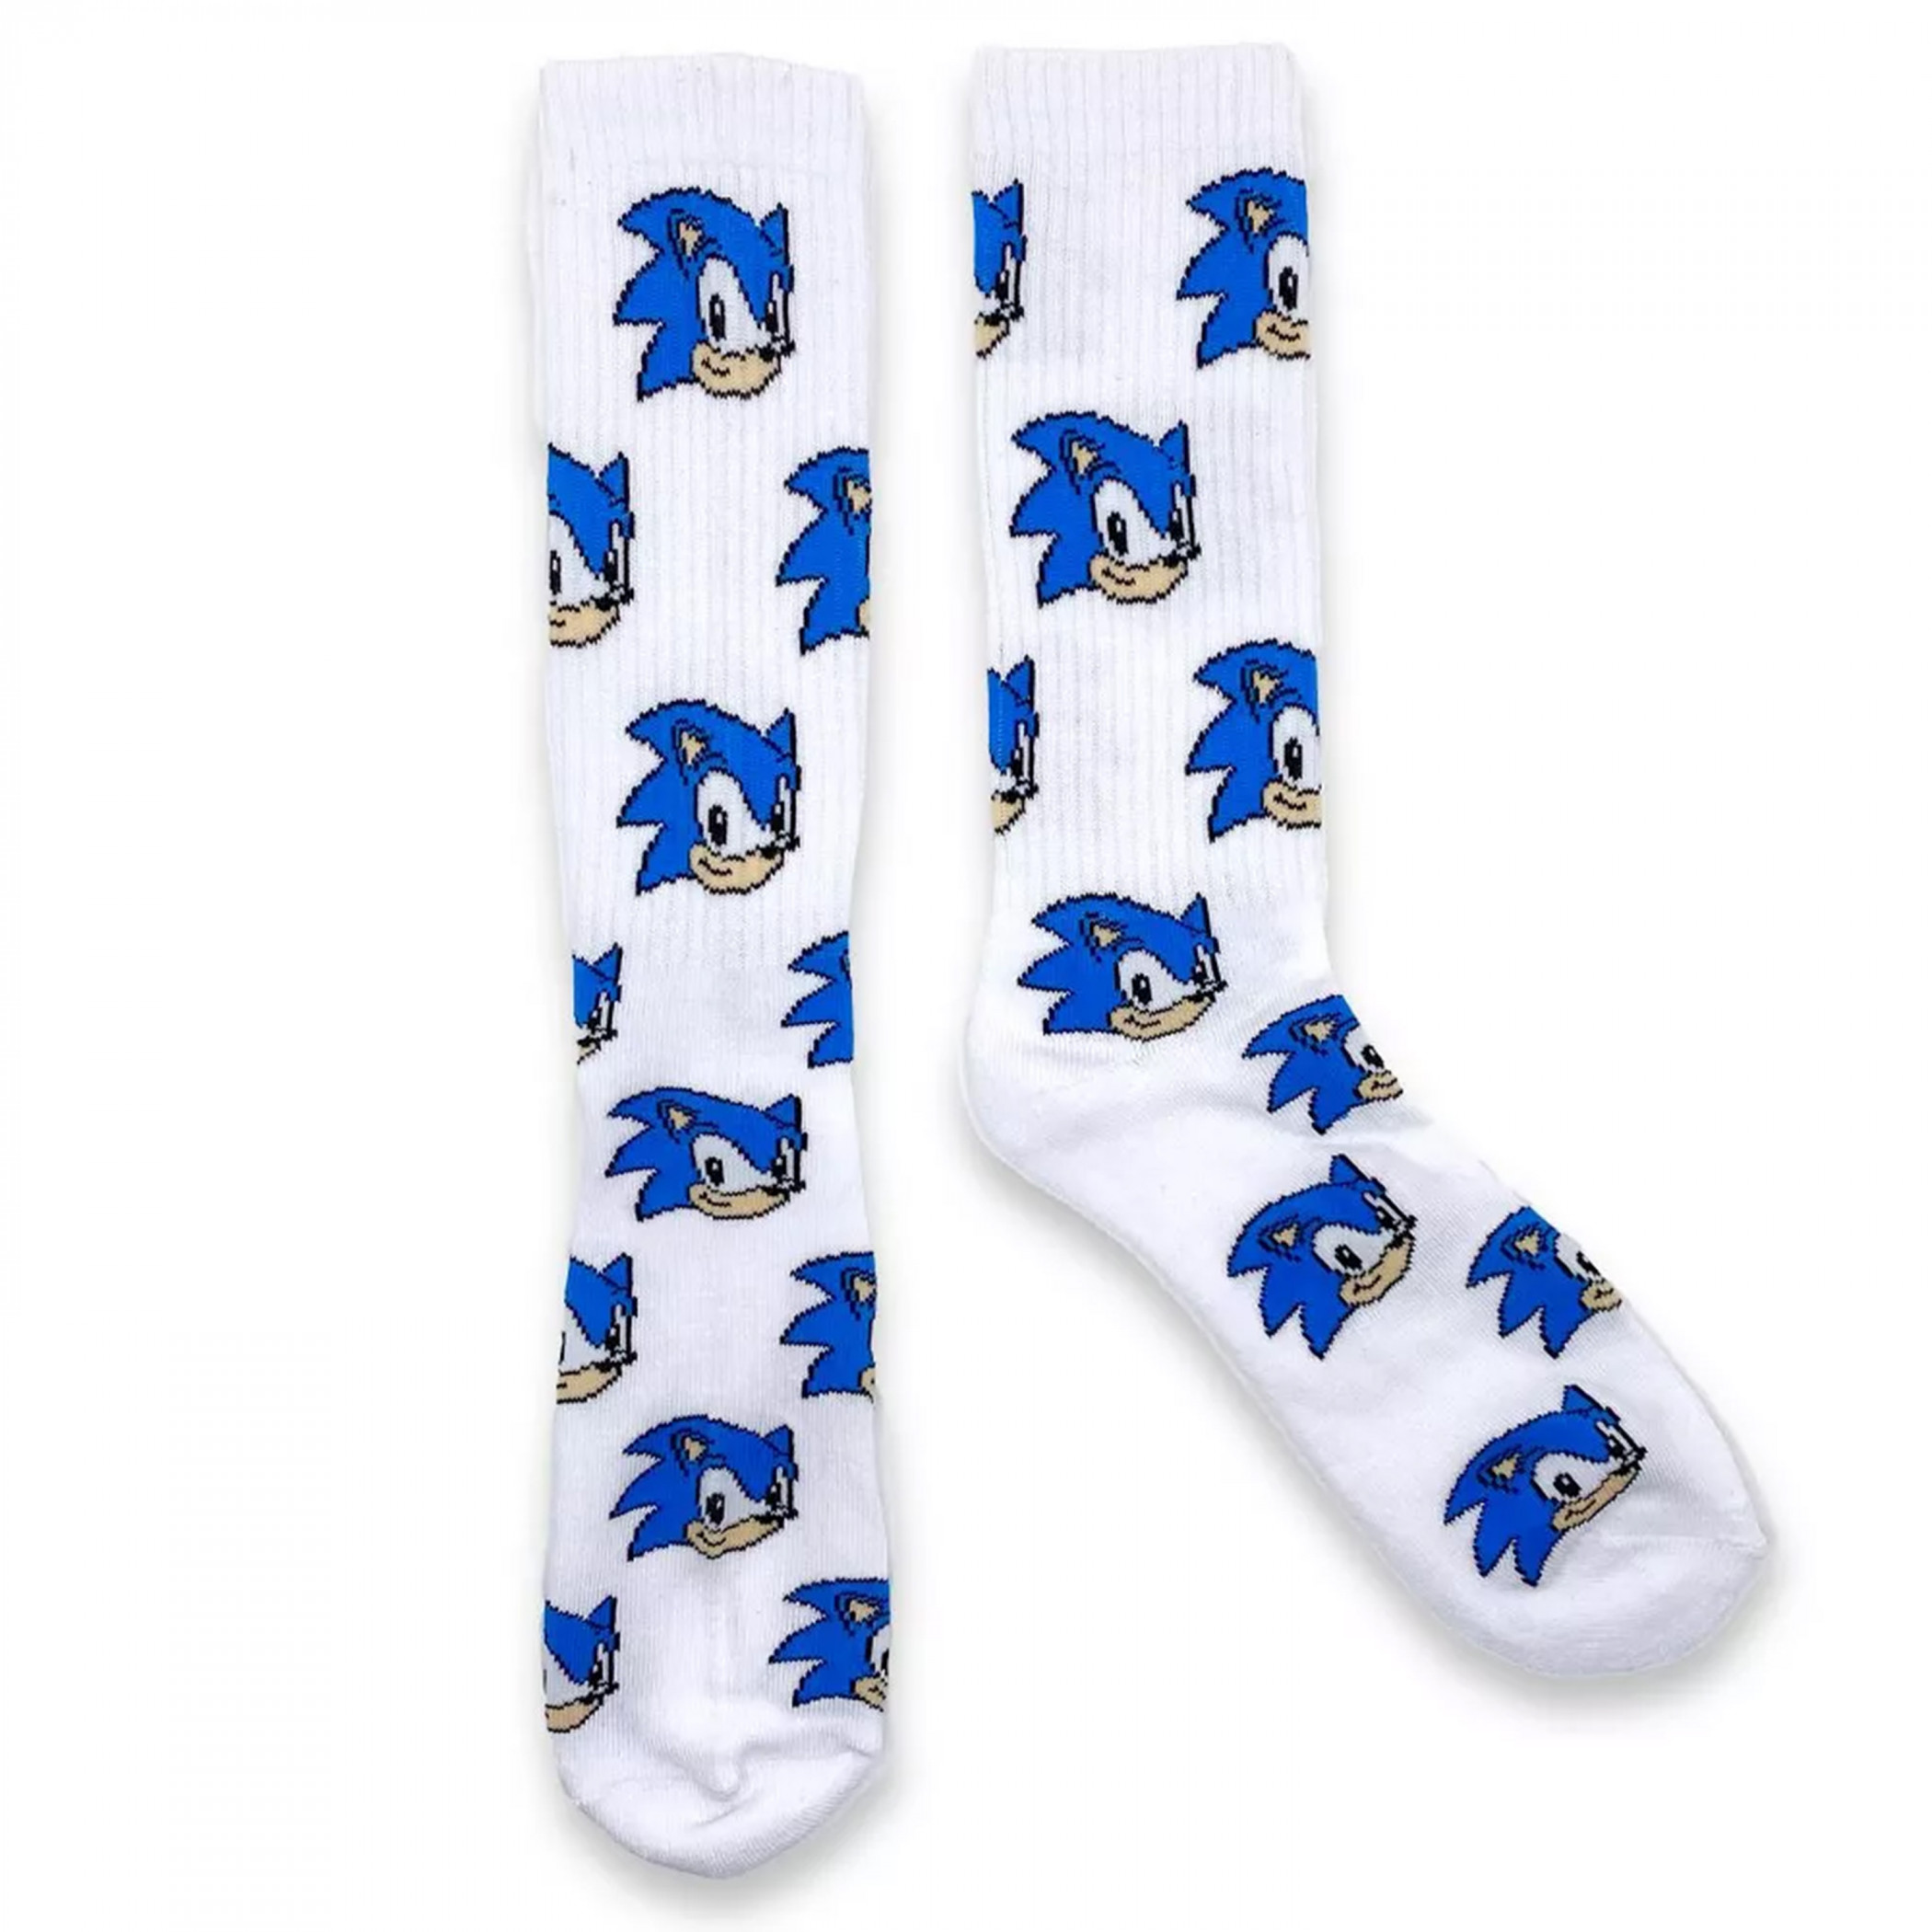 Sonic The Hedgehog Men's Crew Socks 3-Pair Pack